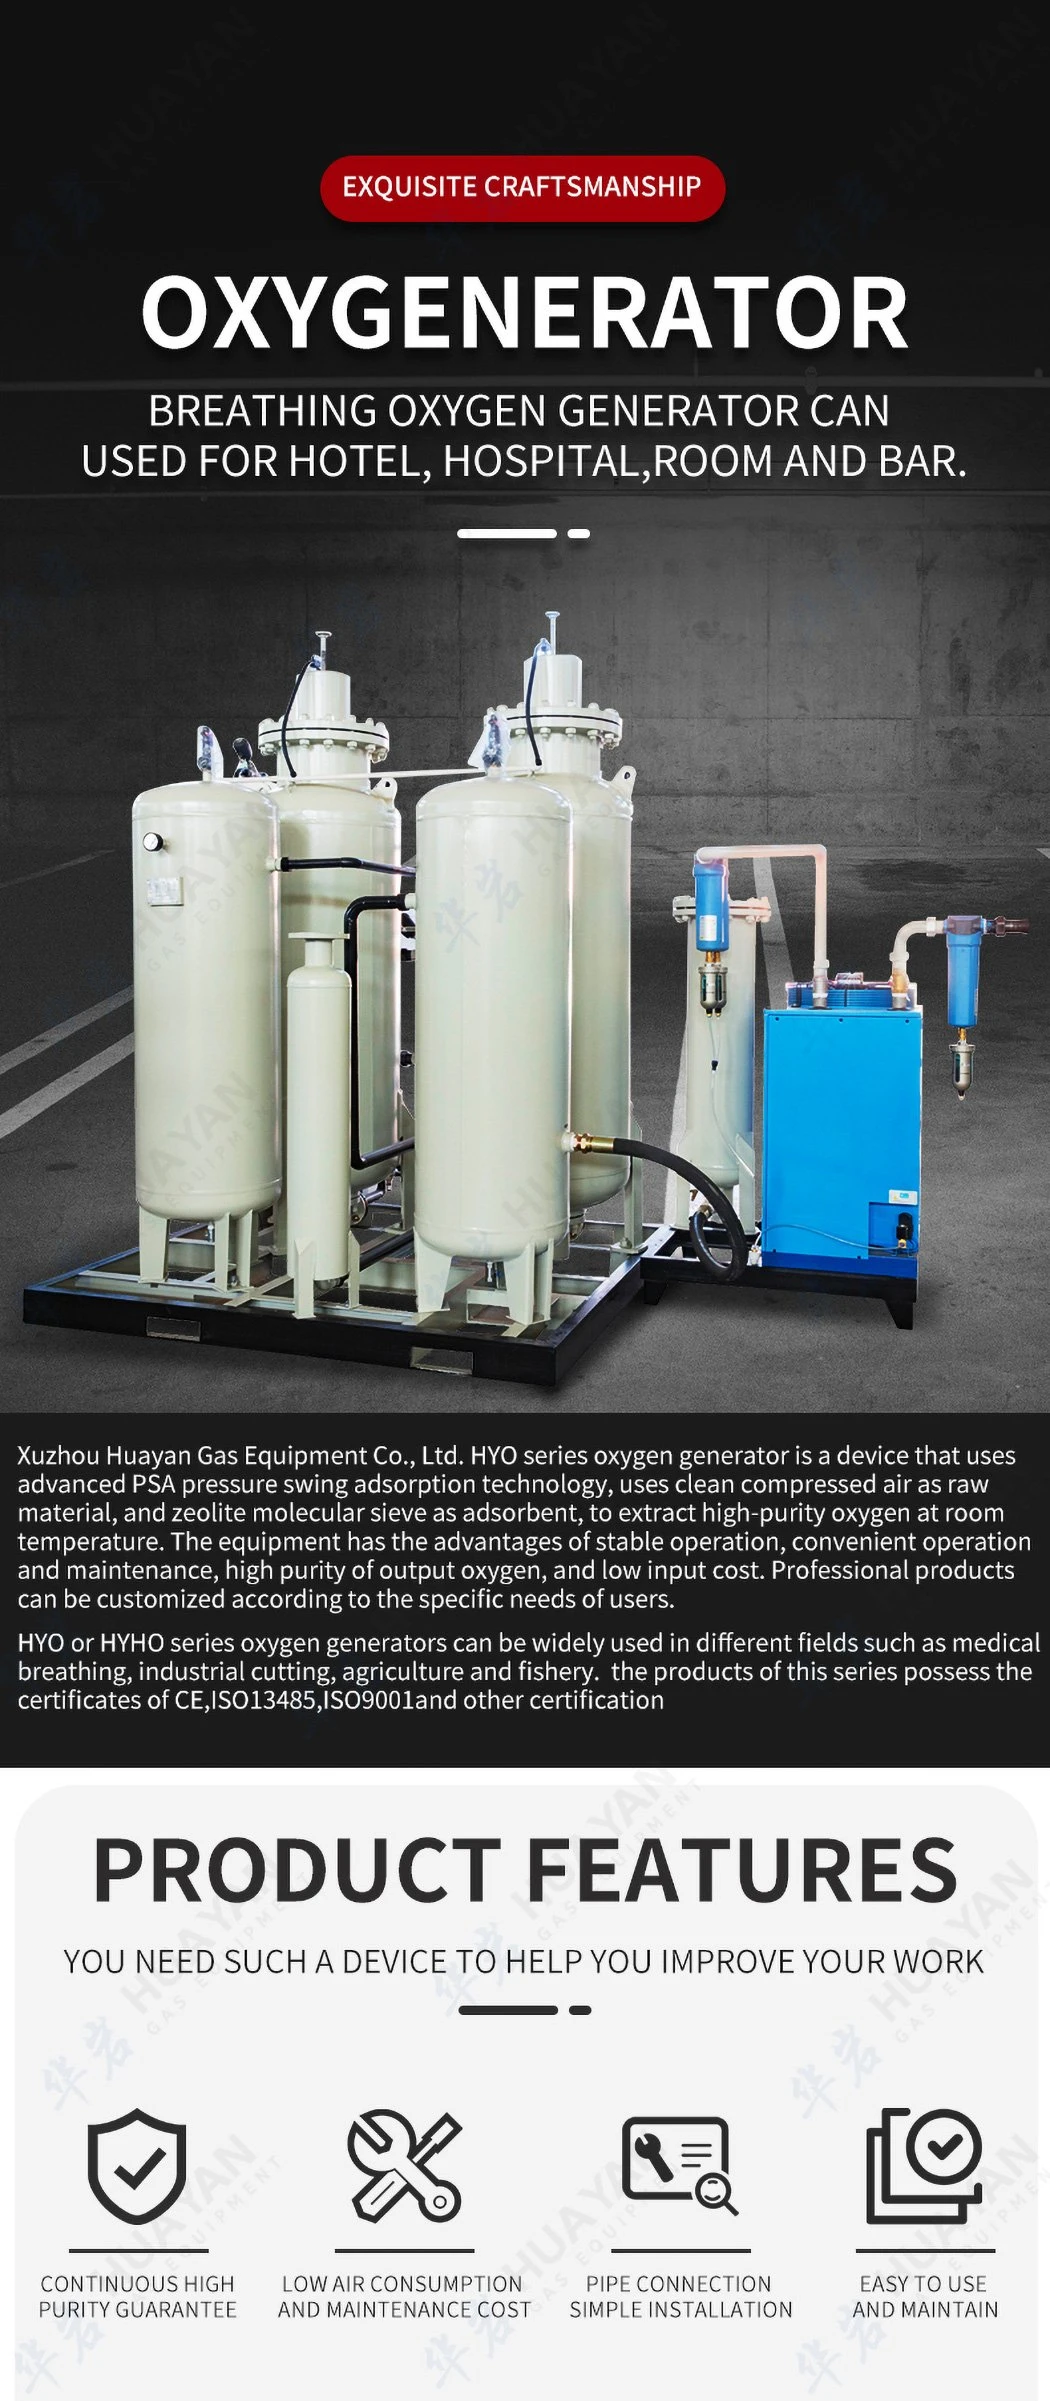 High Quality Liquid Oxygen Nitrogen Plant Air Separation Plant Manufacturer